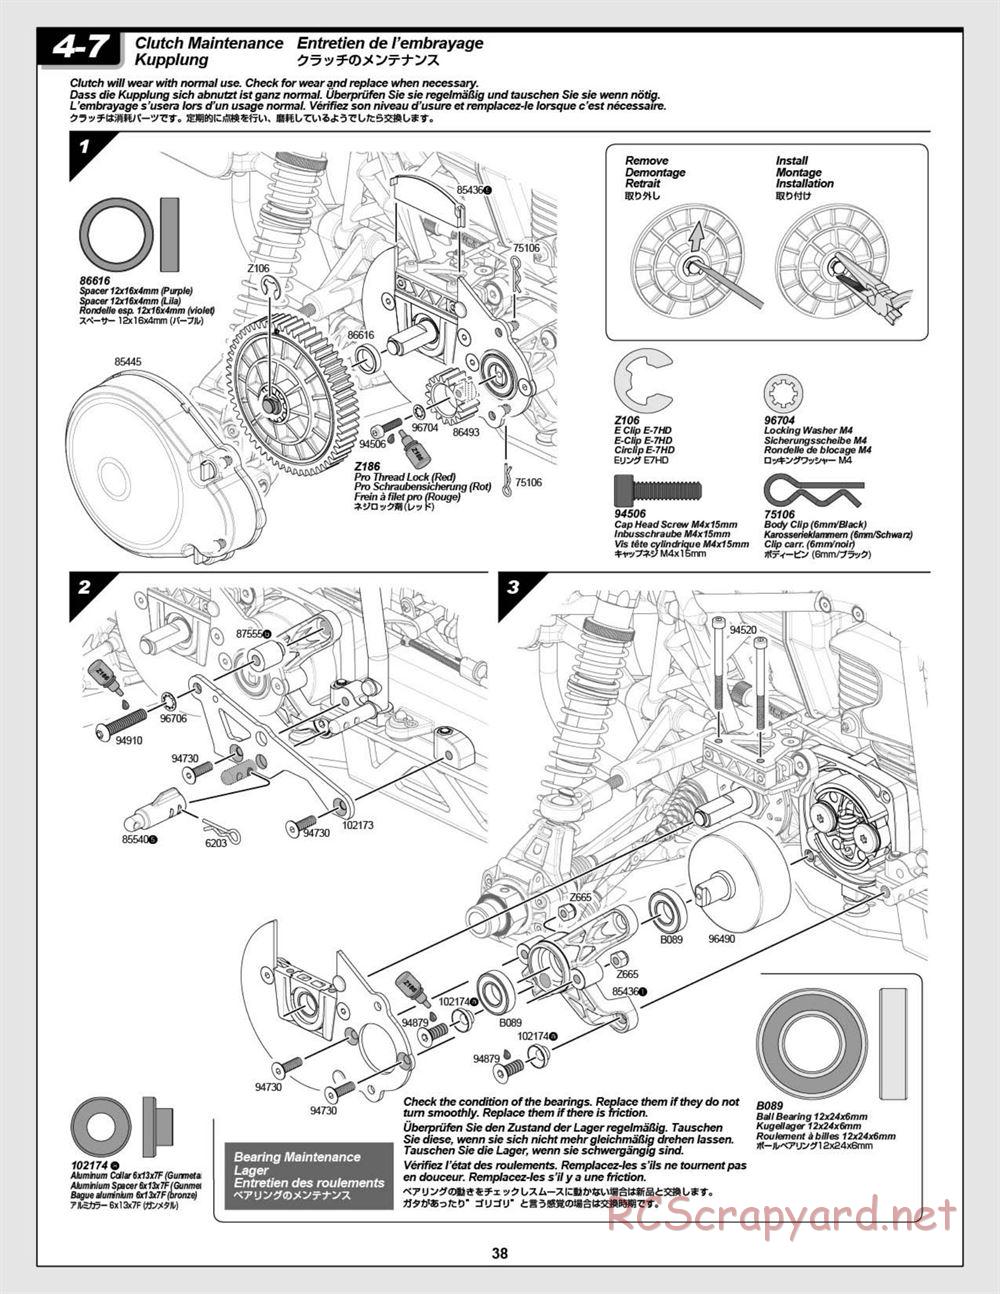 HPI - Baja 5B 2.0 RTR - Manual - Page 38